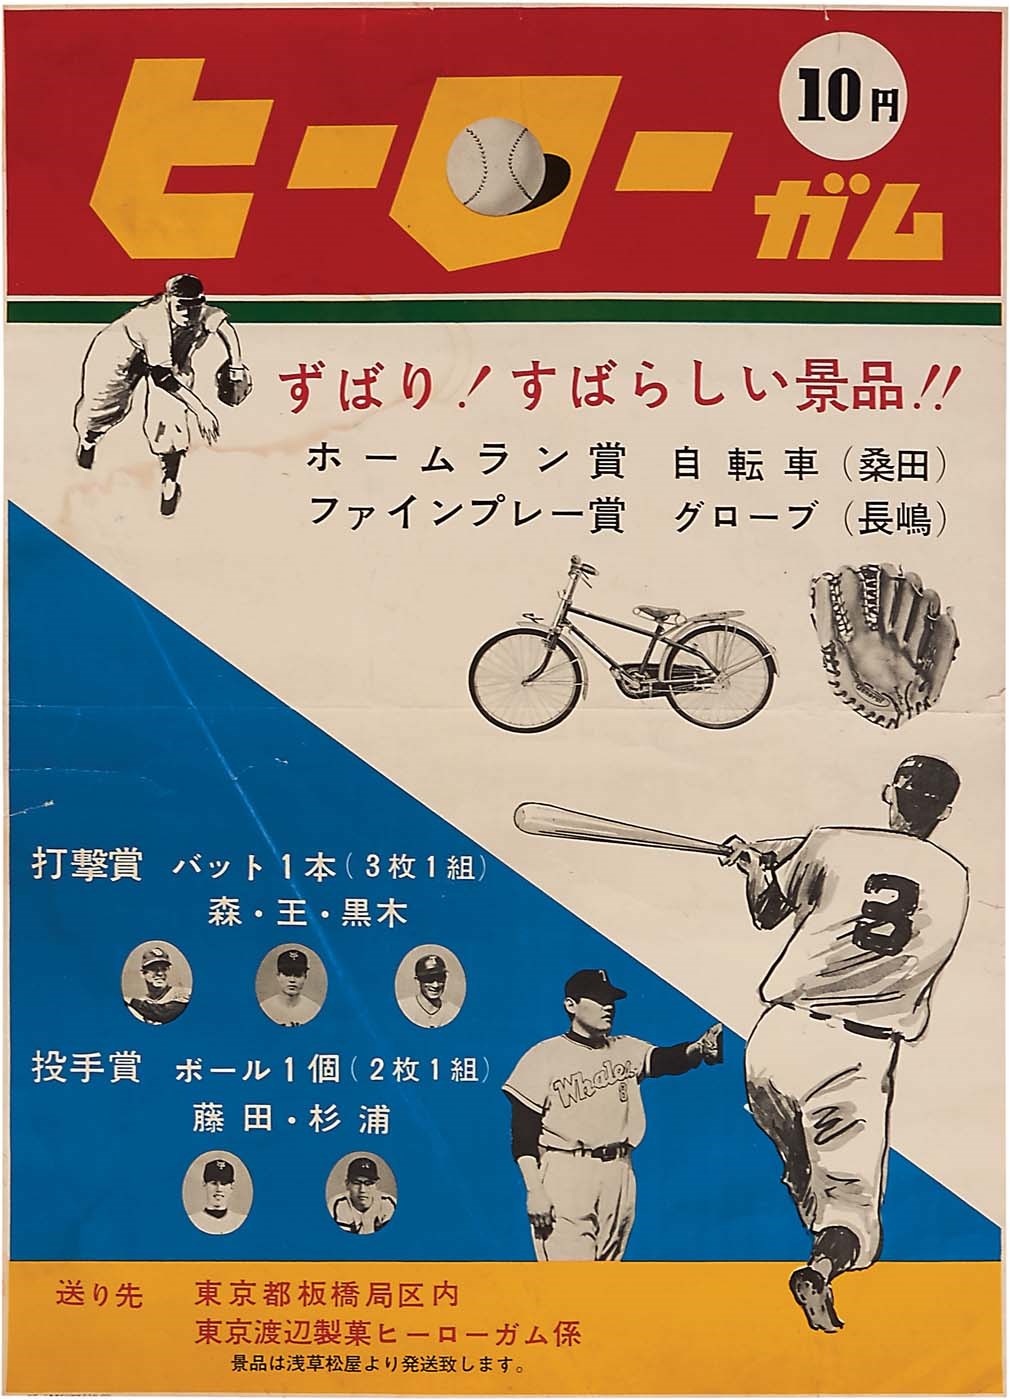 - 1960 Sadaharu Oh "Hero Gum" Japanese Baseball Card Advertising Poster